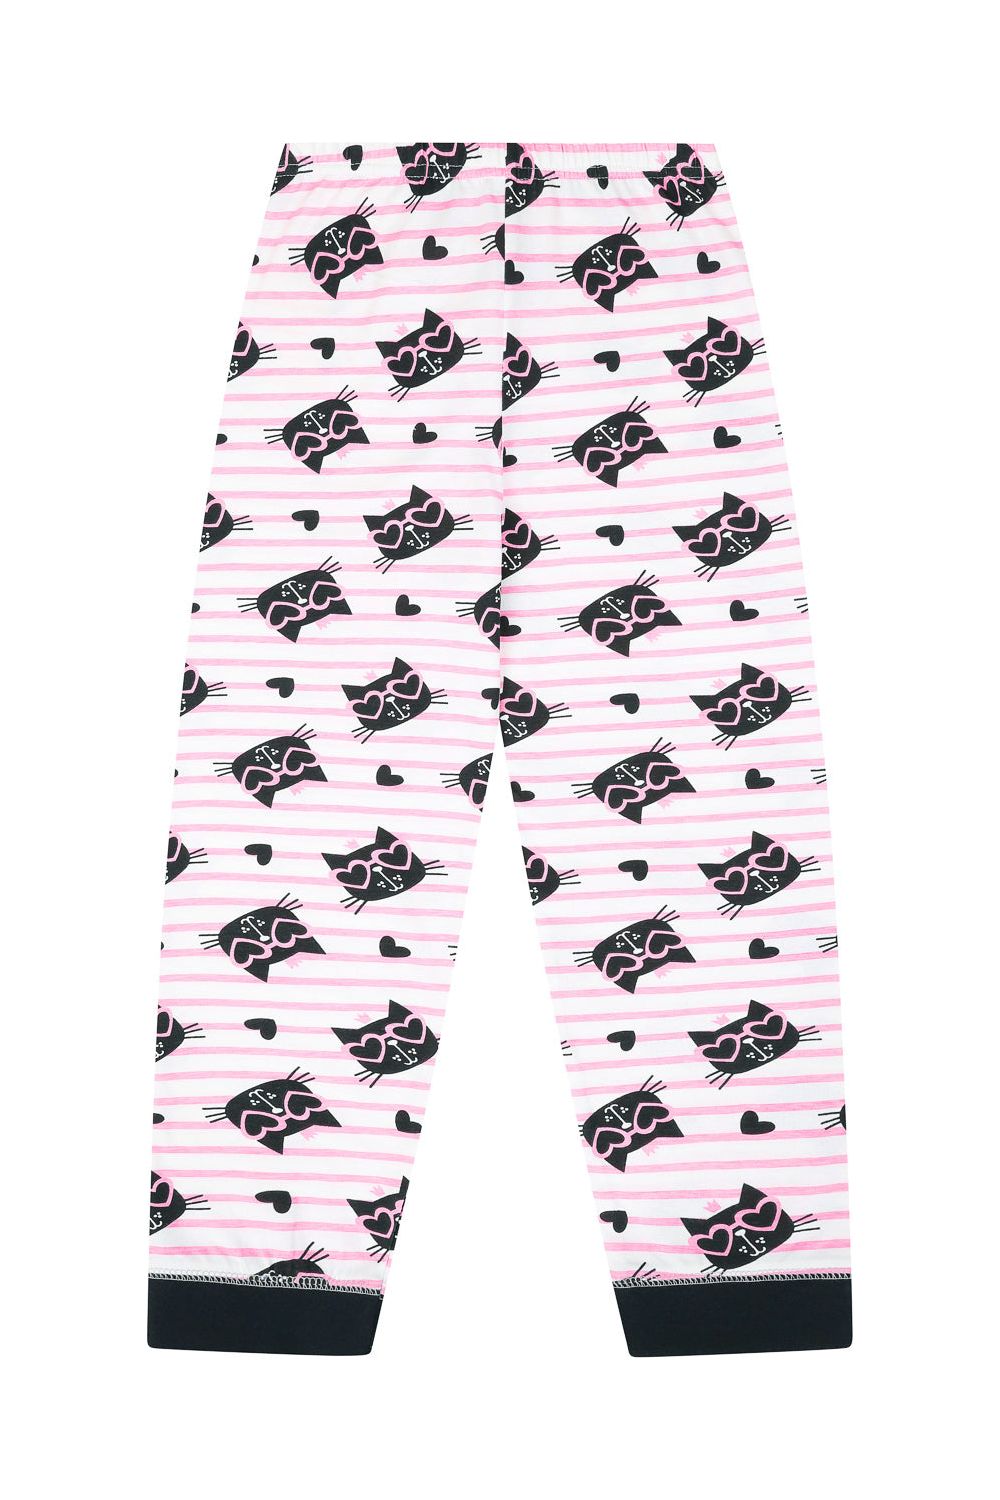 Purrfect Love Cat Long Pyjamas - Pyjamas.com